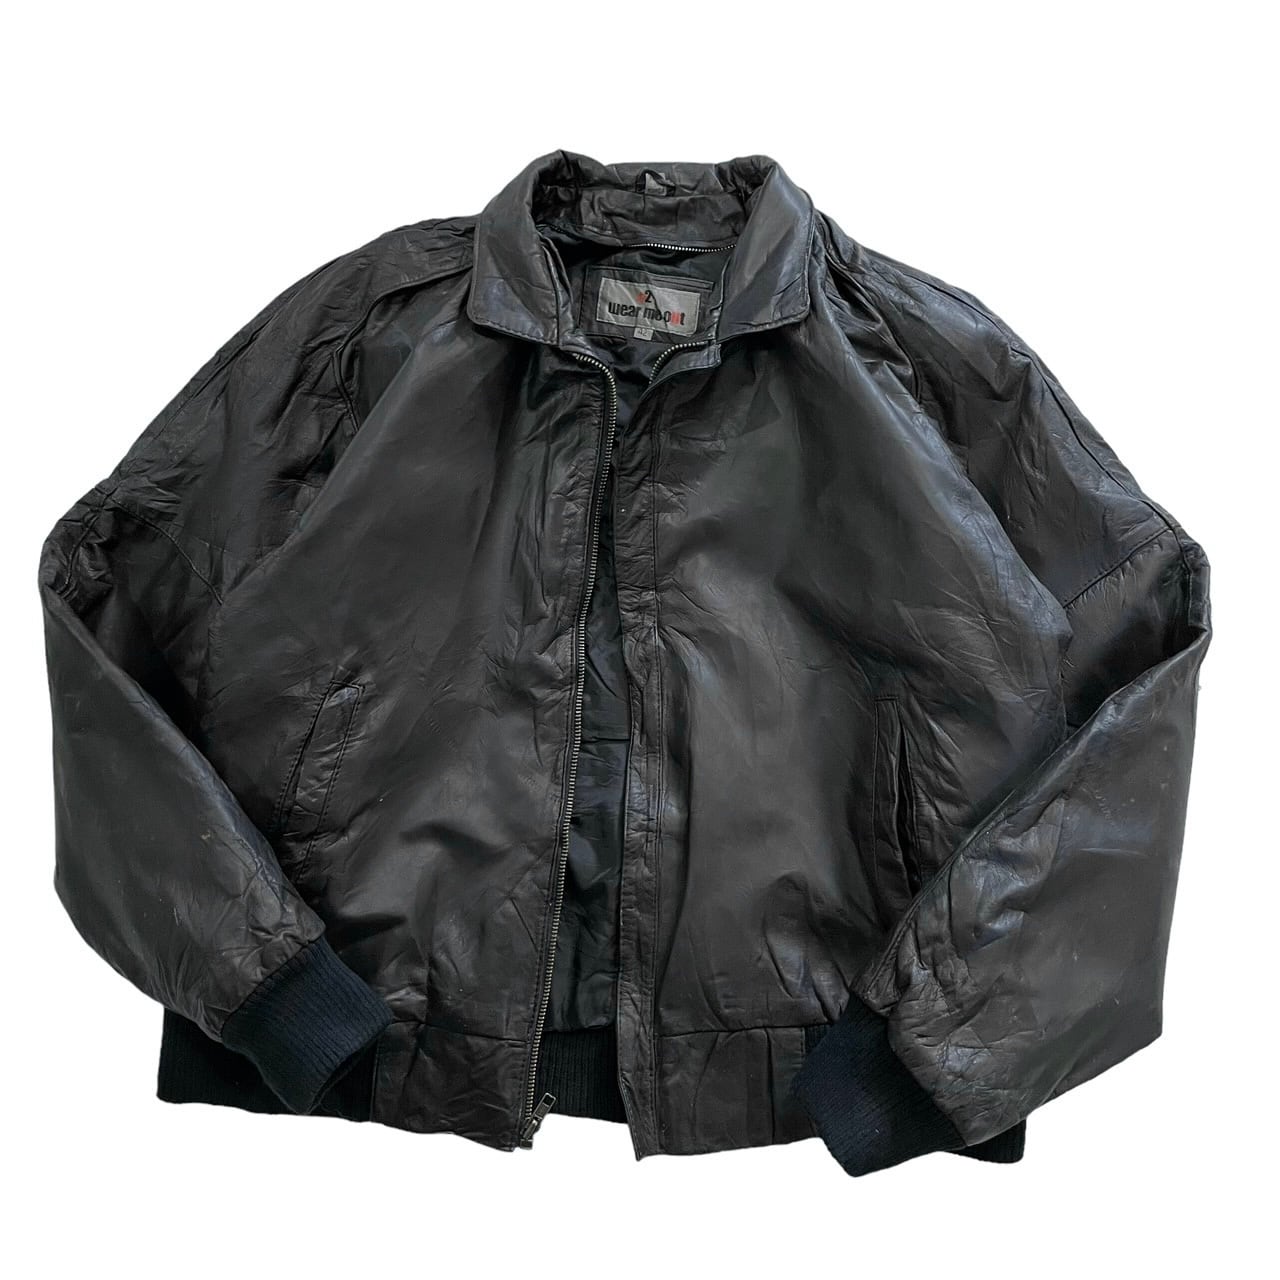 1990's gear short leather jacketレザージャケットサイズXL